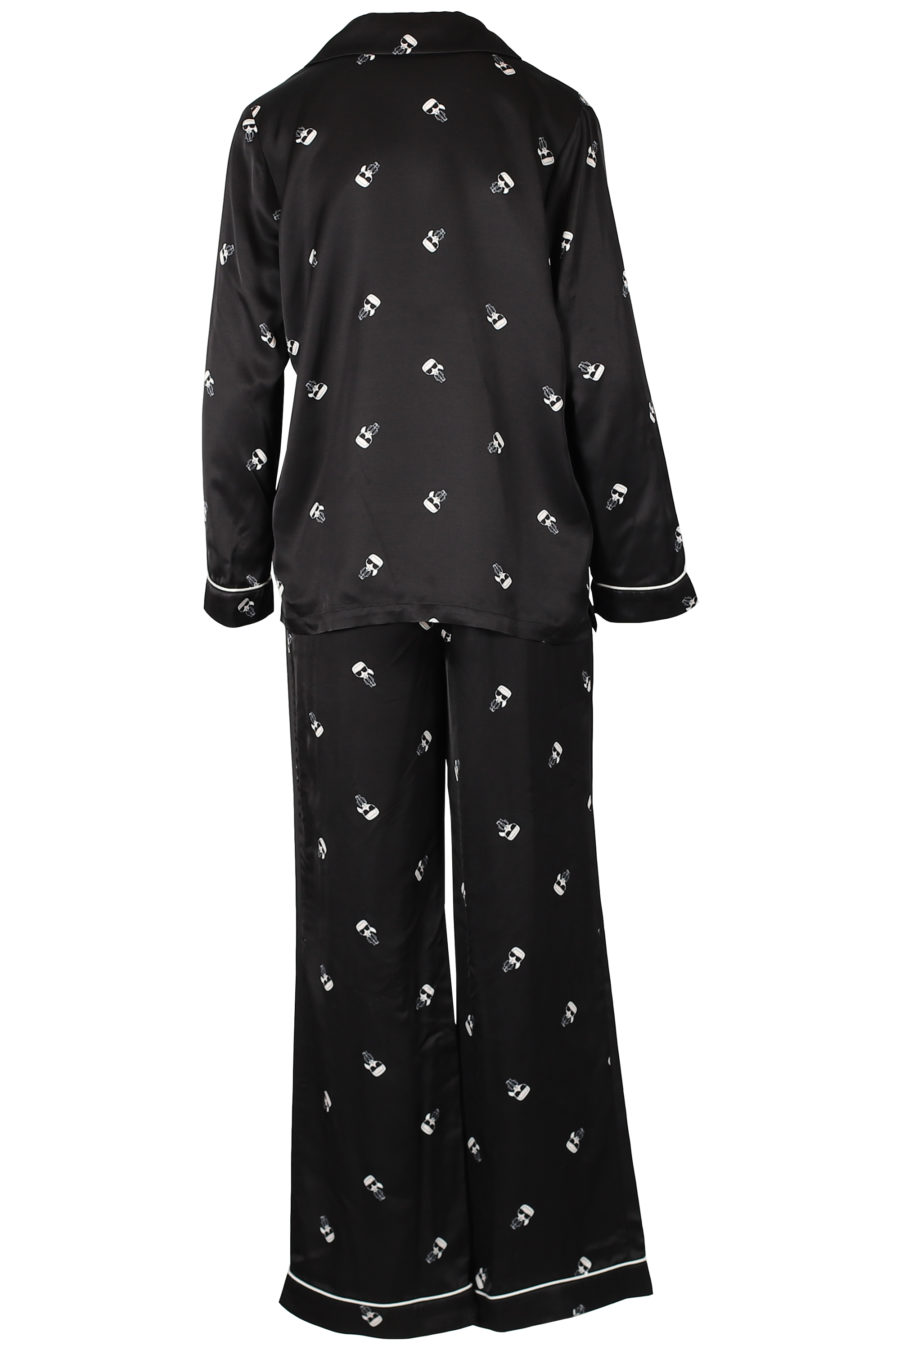 Set de regalo pijama de color negro - IMG 3287